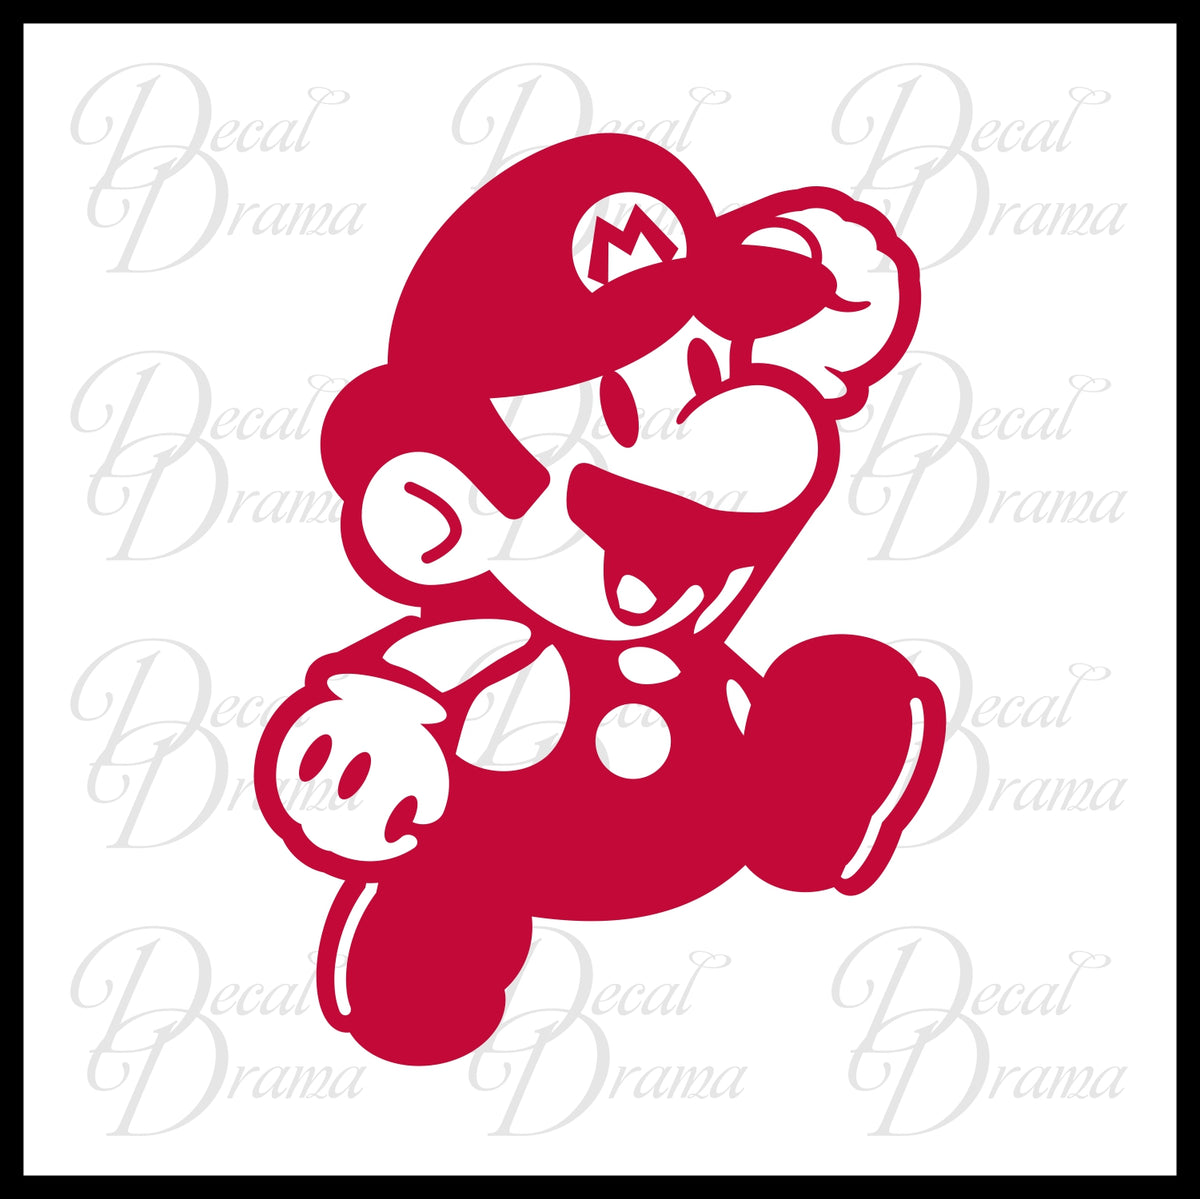 Nintendo, Mario bros, Super mario, Video game, Super mario bros, stickers,  vinyl stickers, decal